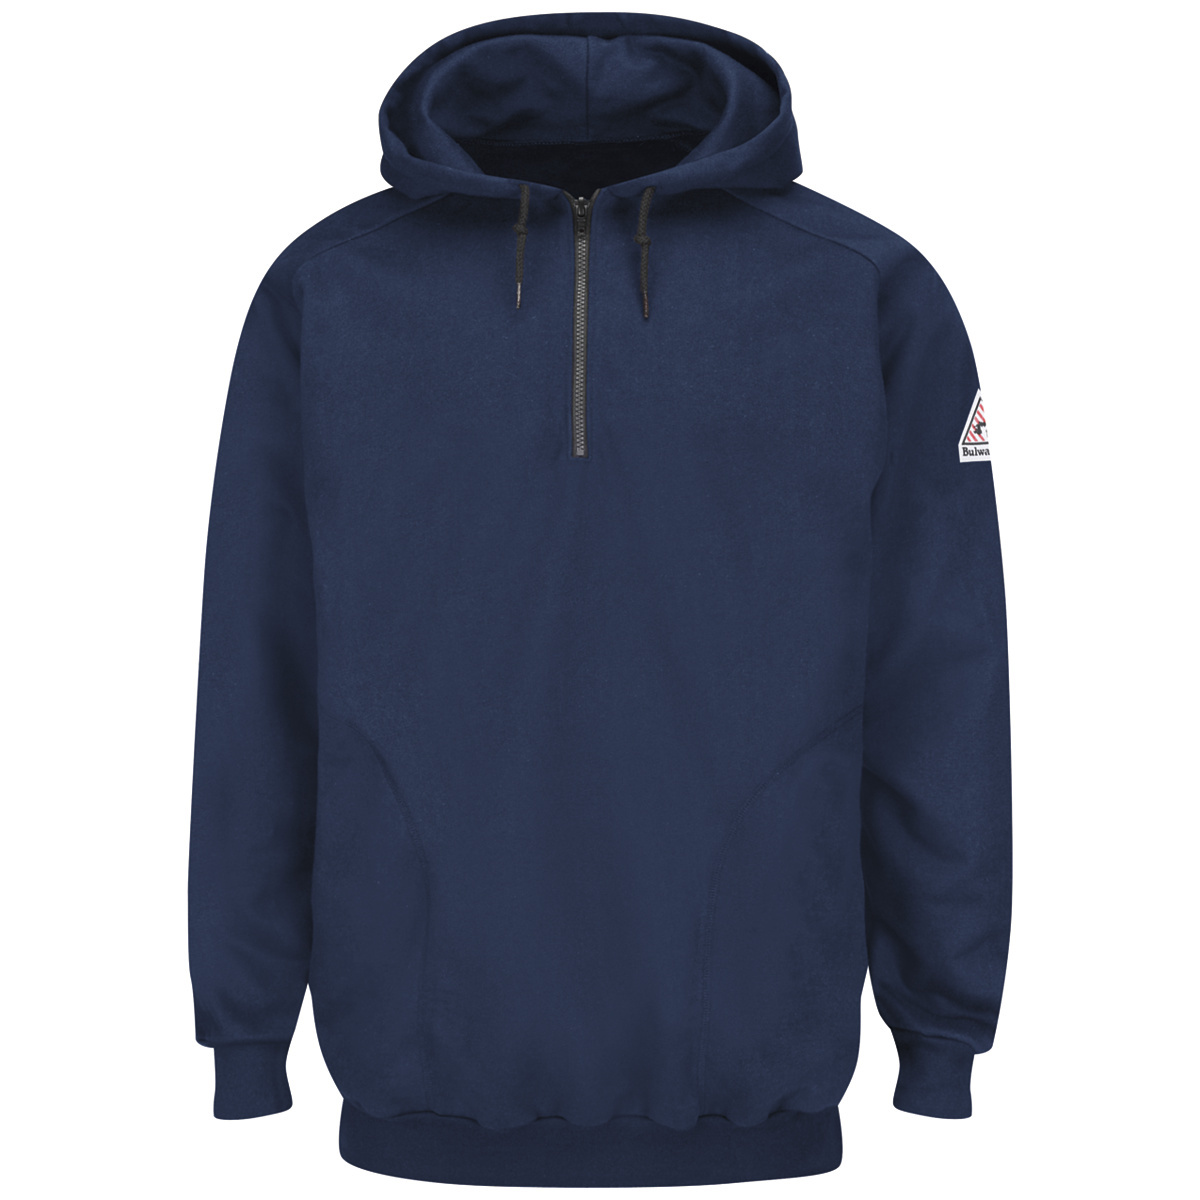 Bulwark® 2X Tall Navy Blue Cotton/Spandex Brushed Fleece Flame Resistant Hooded Sweatshirt